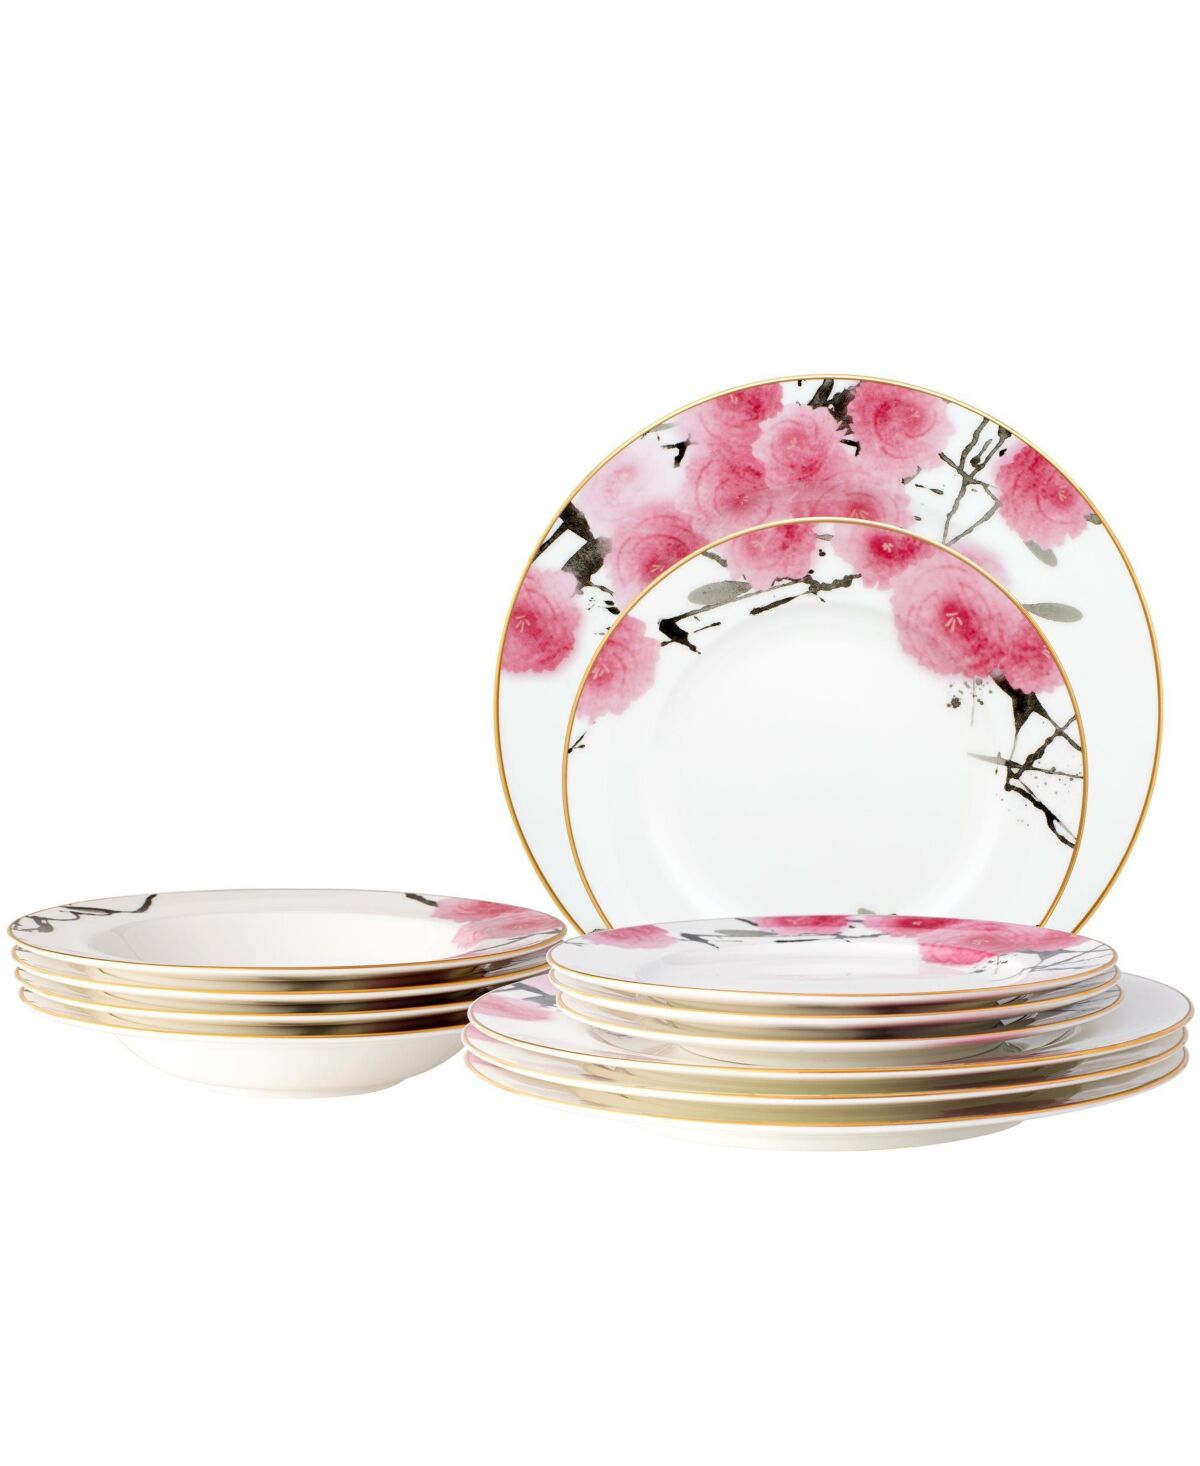 Noritake Yae 12 Pc Dinnerware Set, Service for 4 - Pink And White